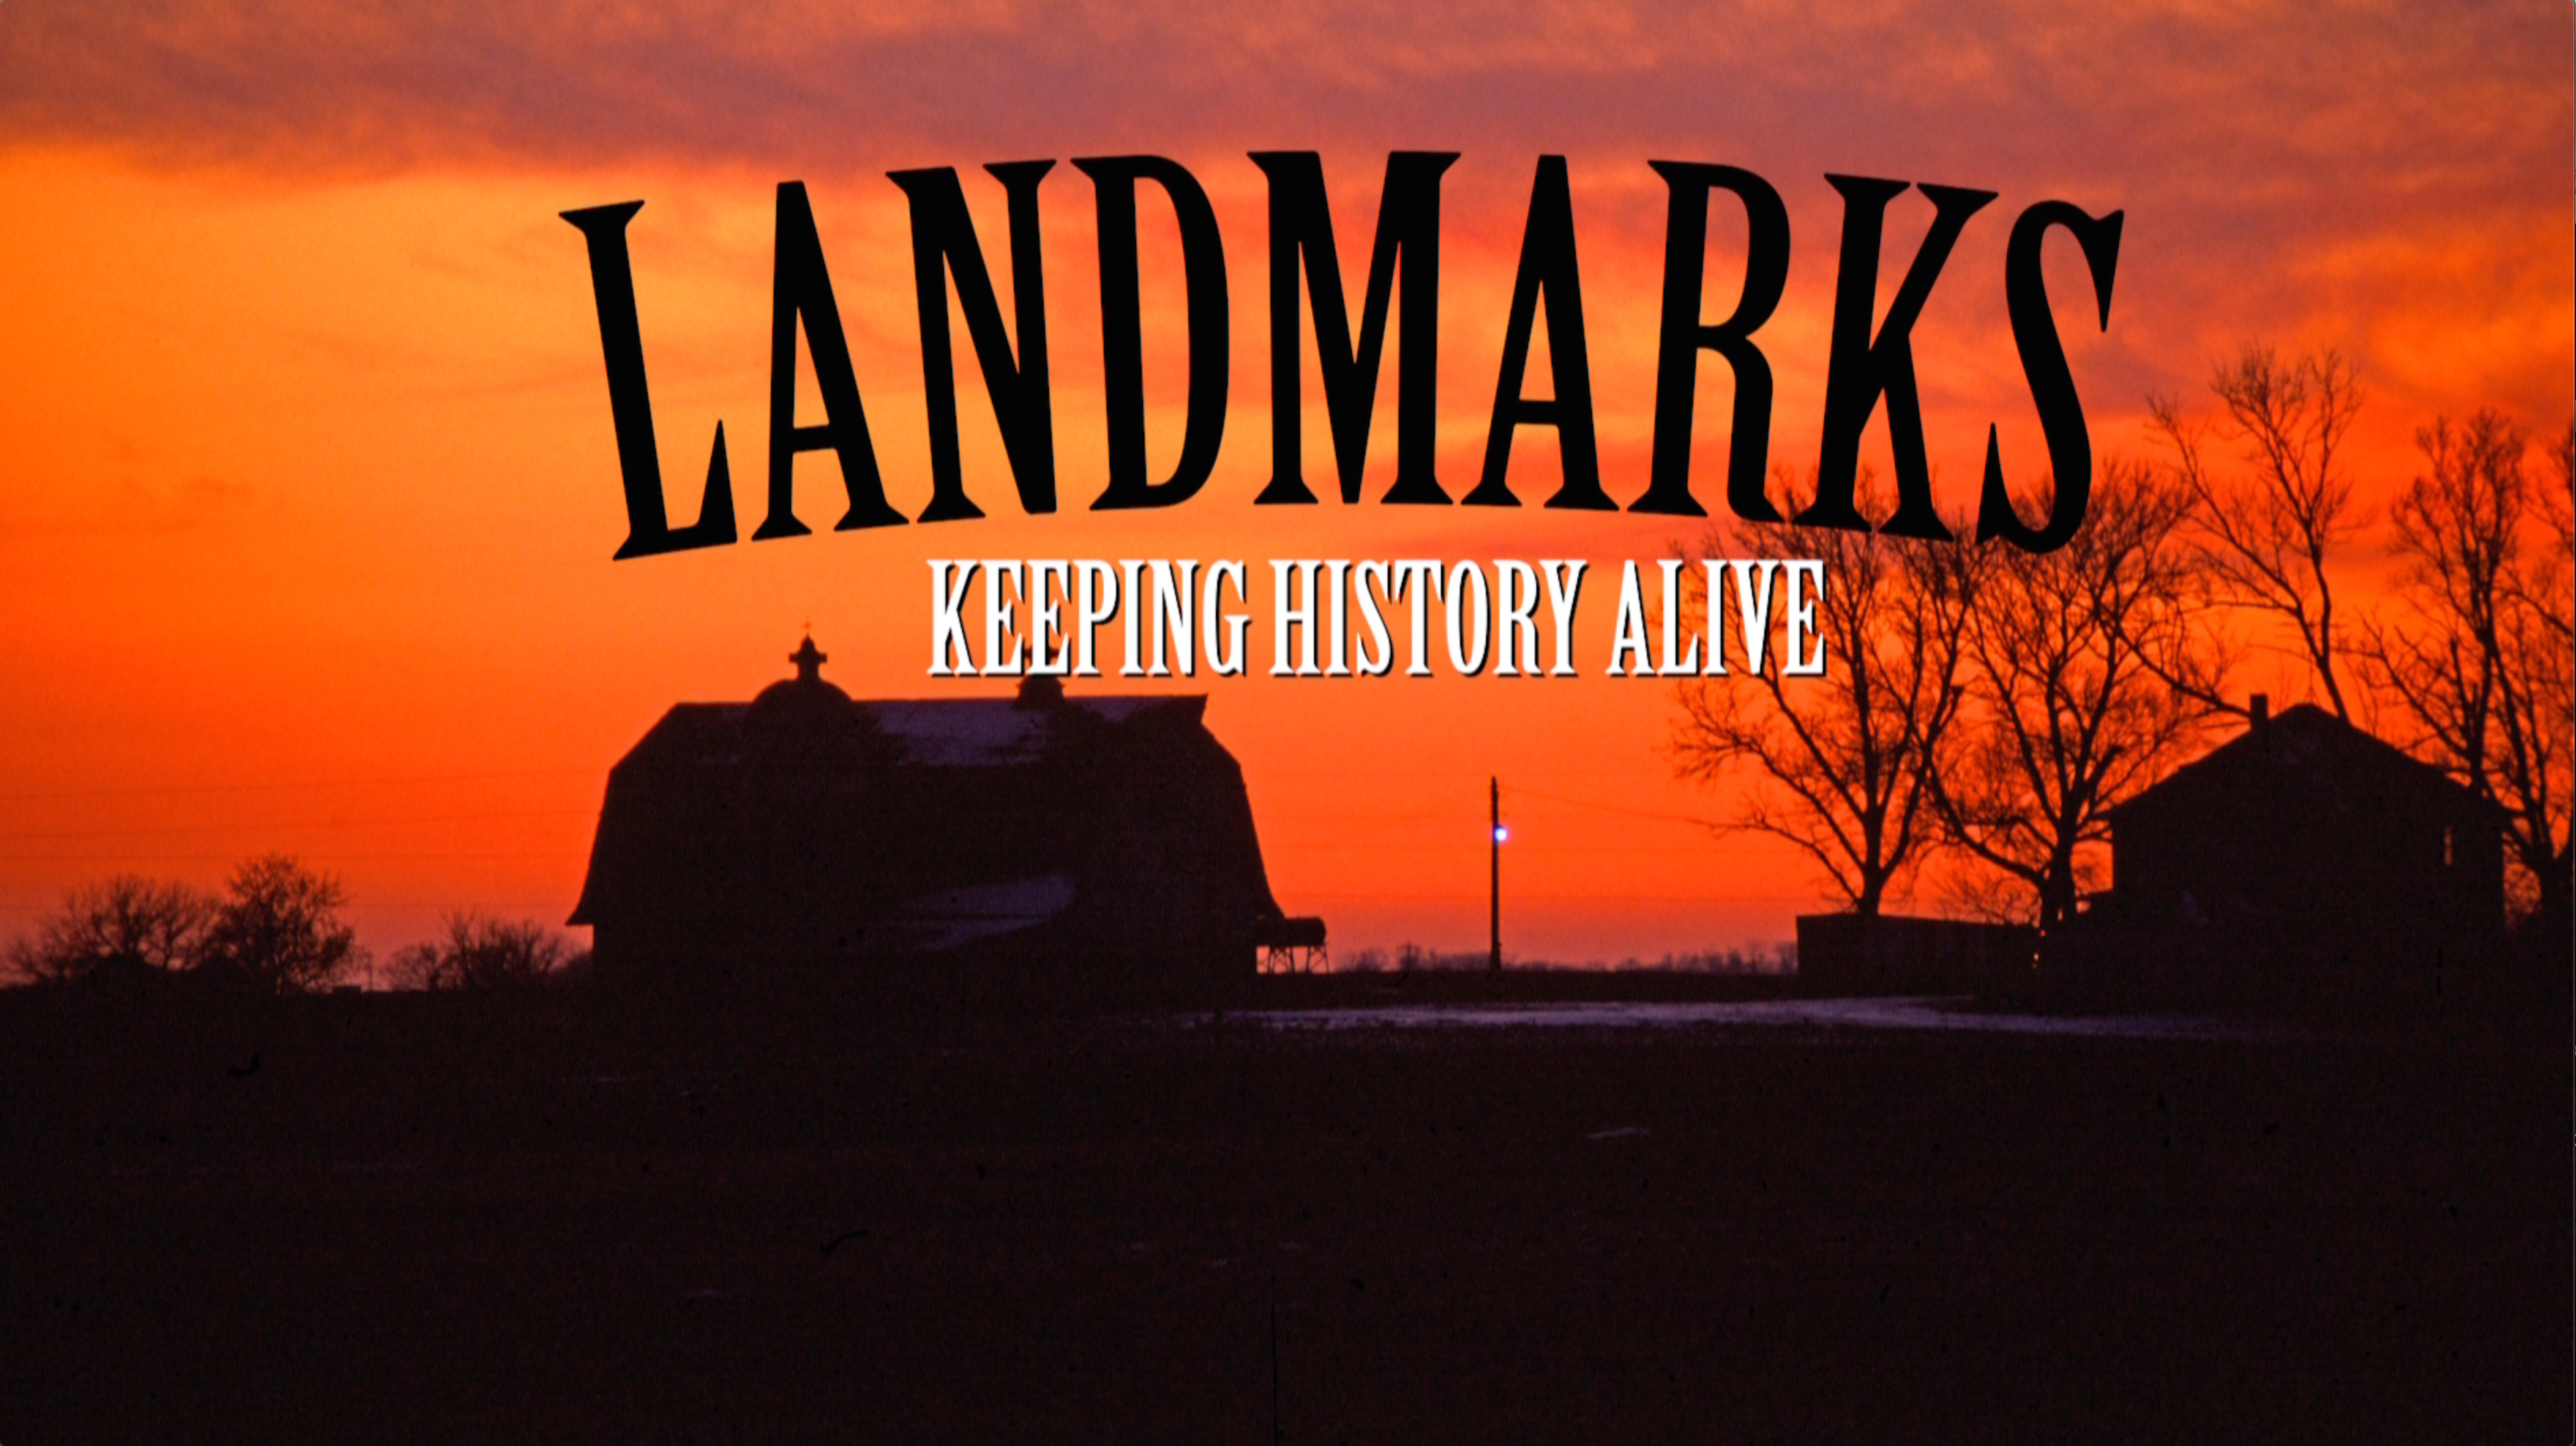 Landmarks: Keeping History Alive